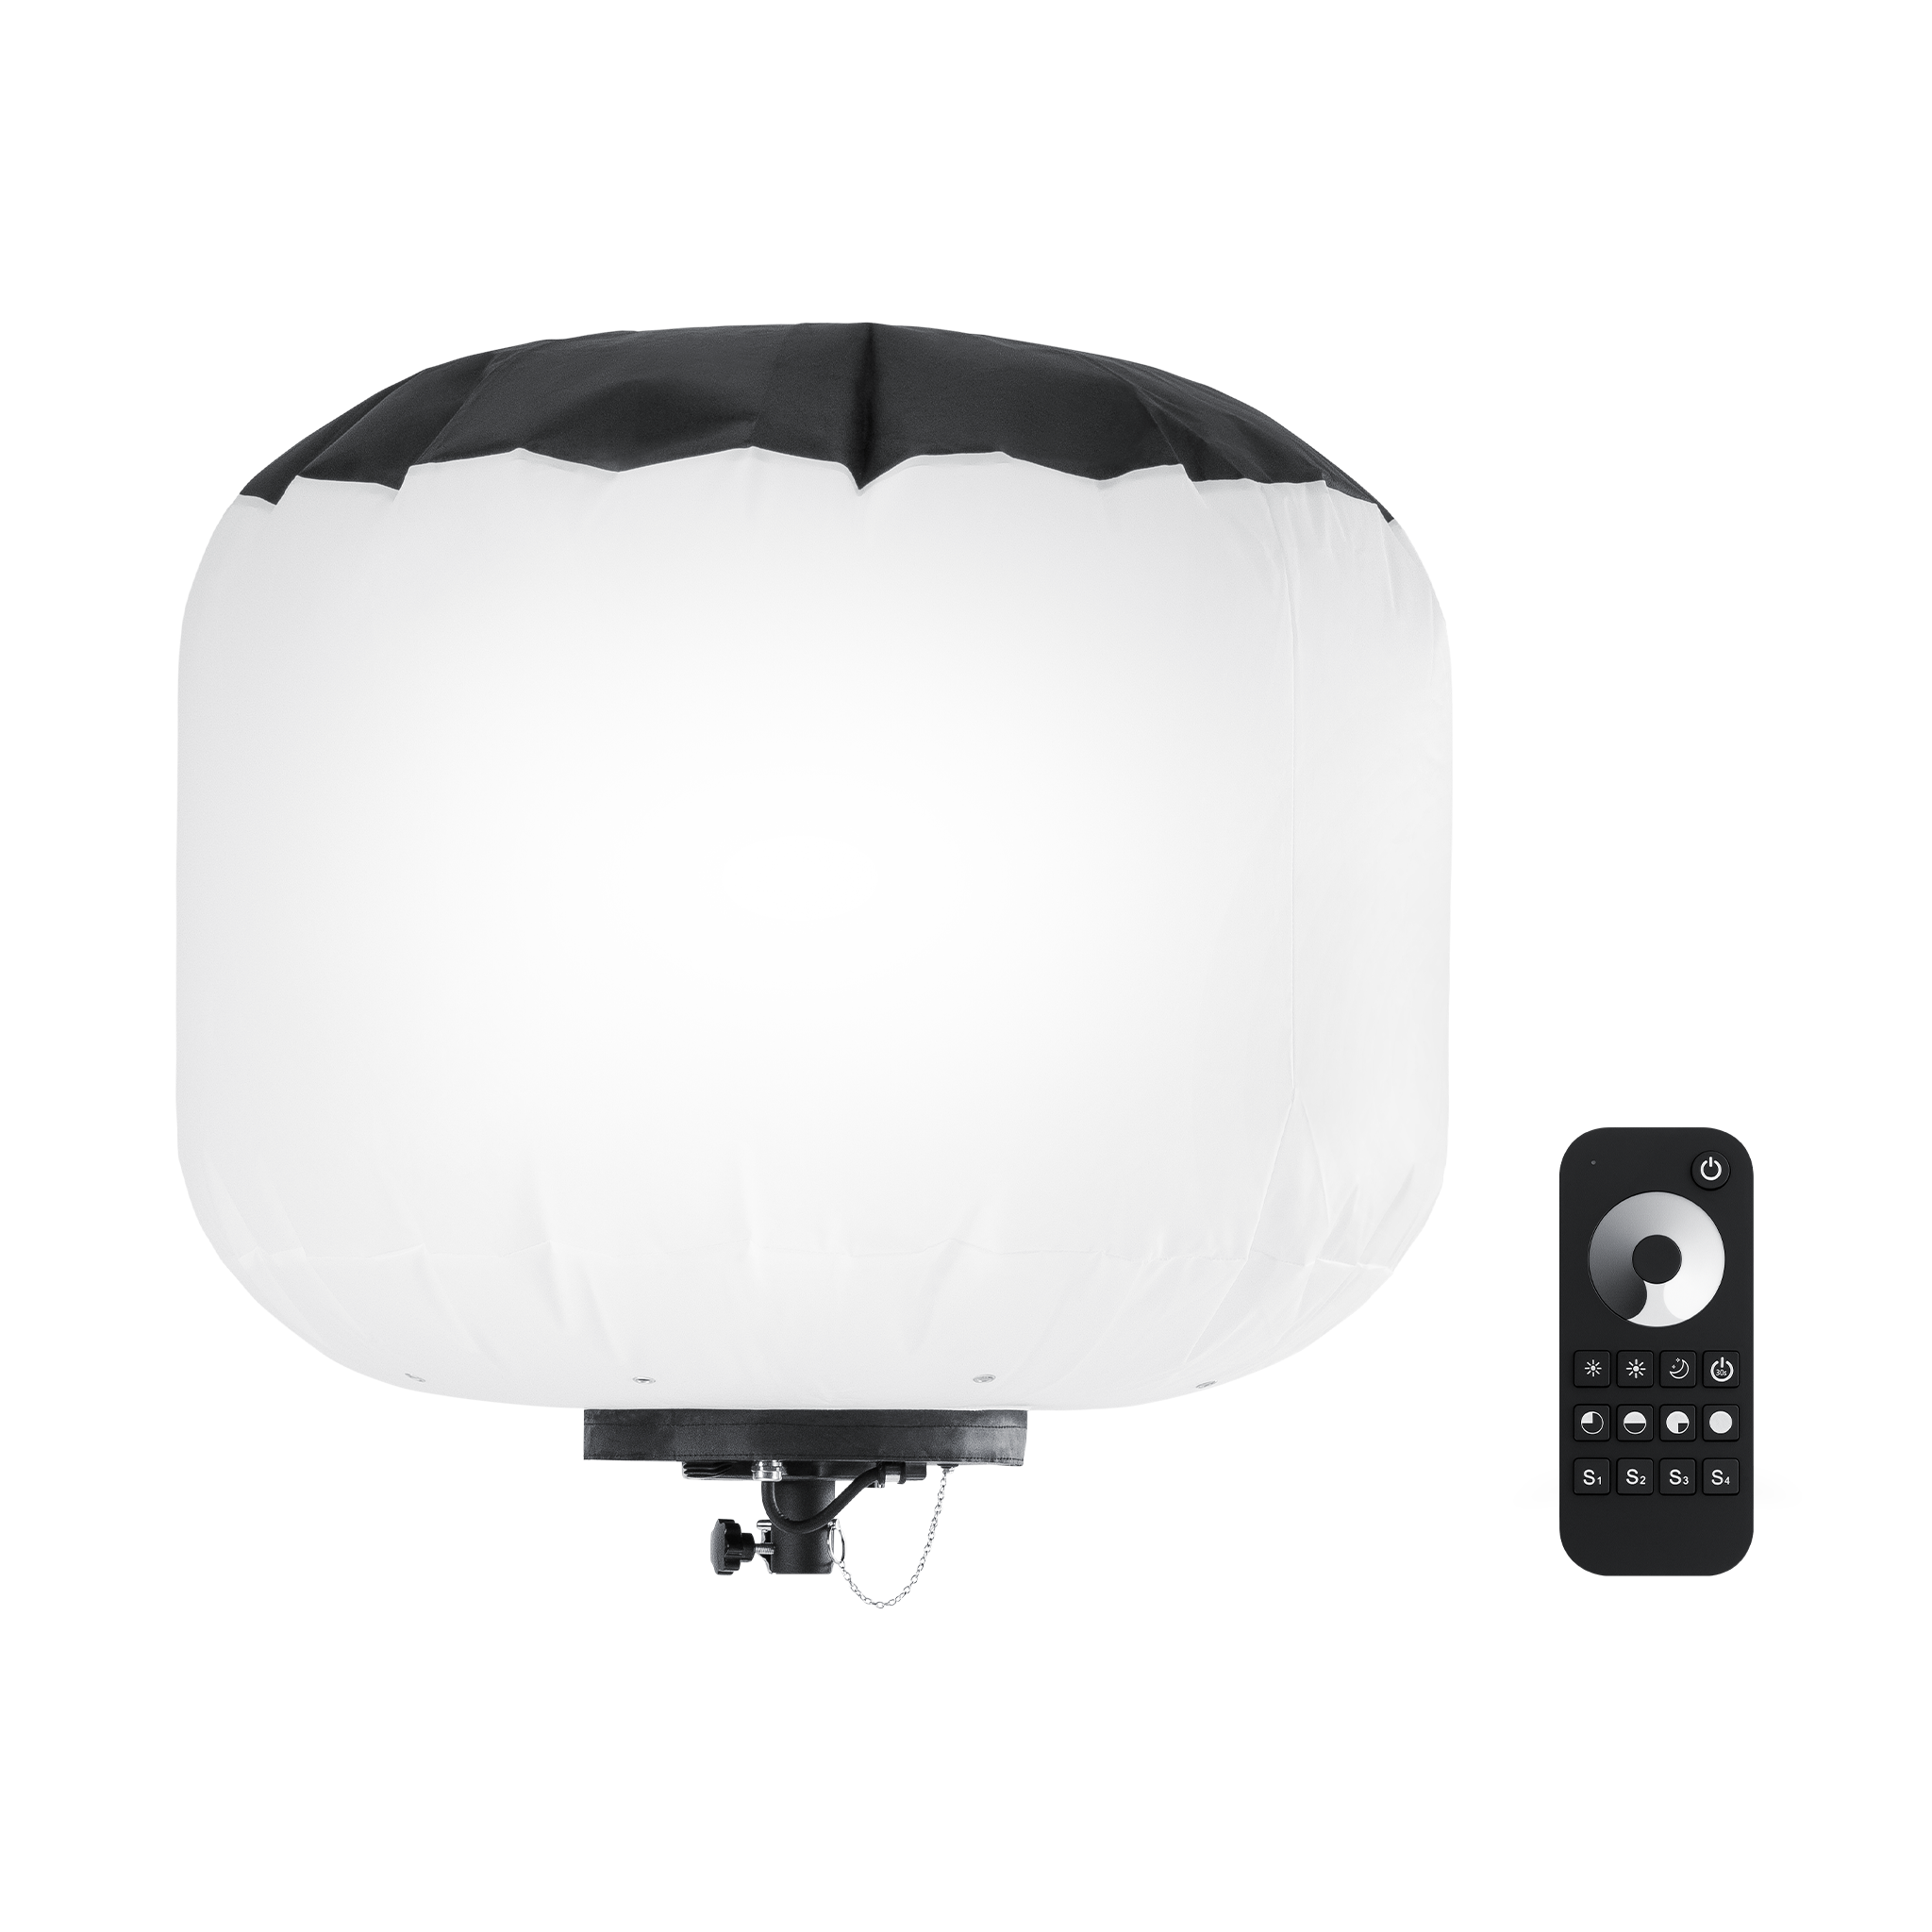 G3 - 800 Watt Balloon Light Fixture (NEW)